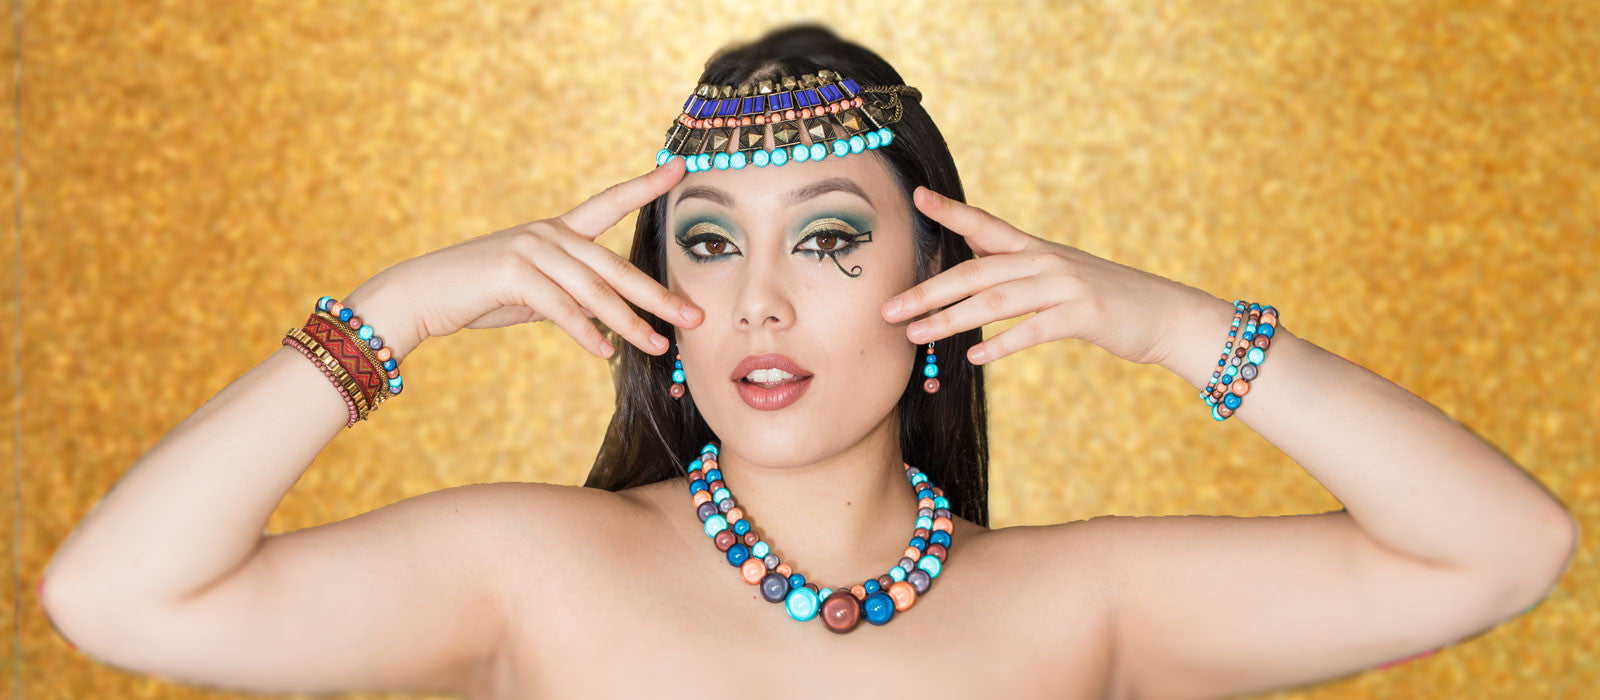 Cleopatra, the truth behind the myth!